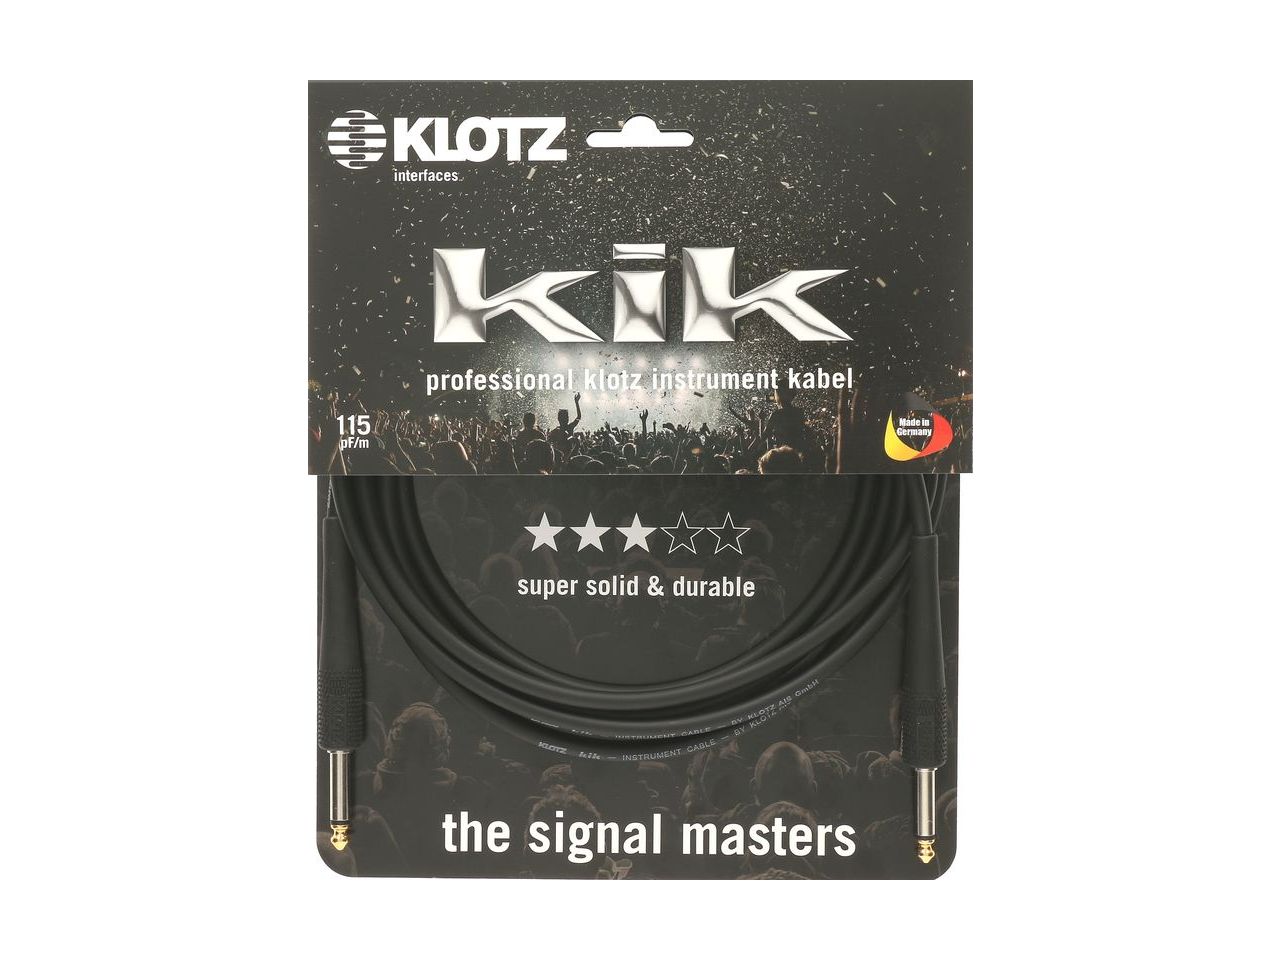 Klotz Guitar 6m (20ft) KIK Instrument Cable-Black-Klotz Gold